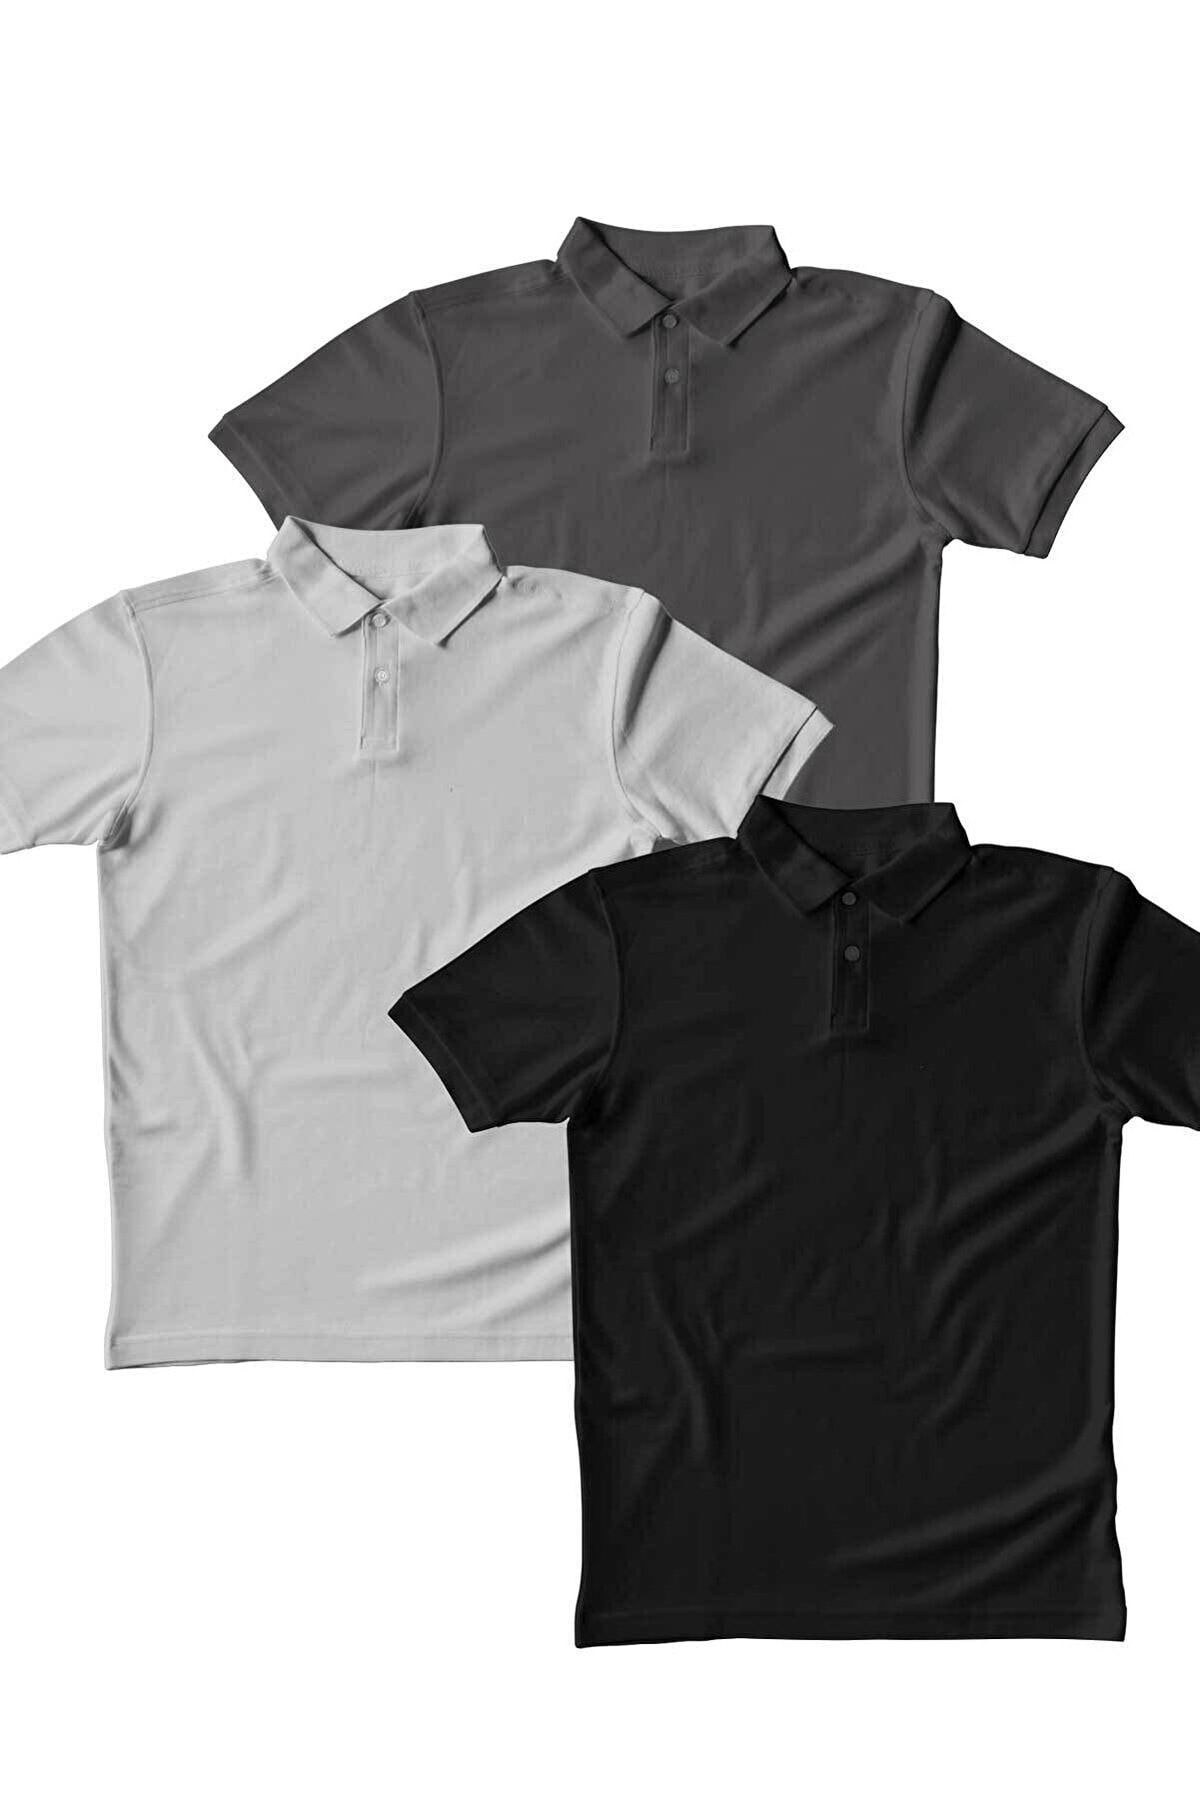 efraim giyim Regular Fit Gri/füme/siyah Pike Dokulu Polo Yaka T-shirt